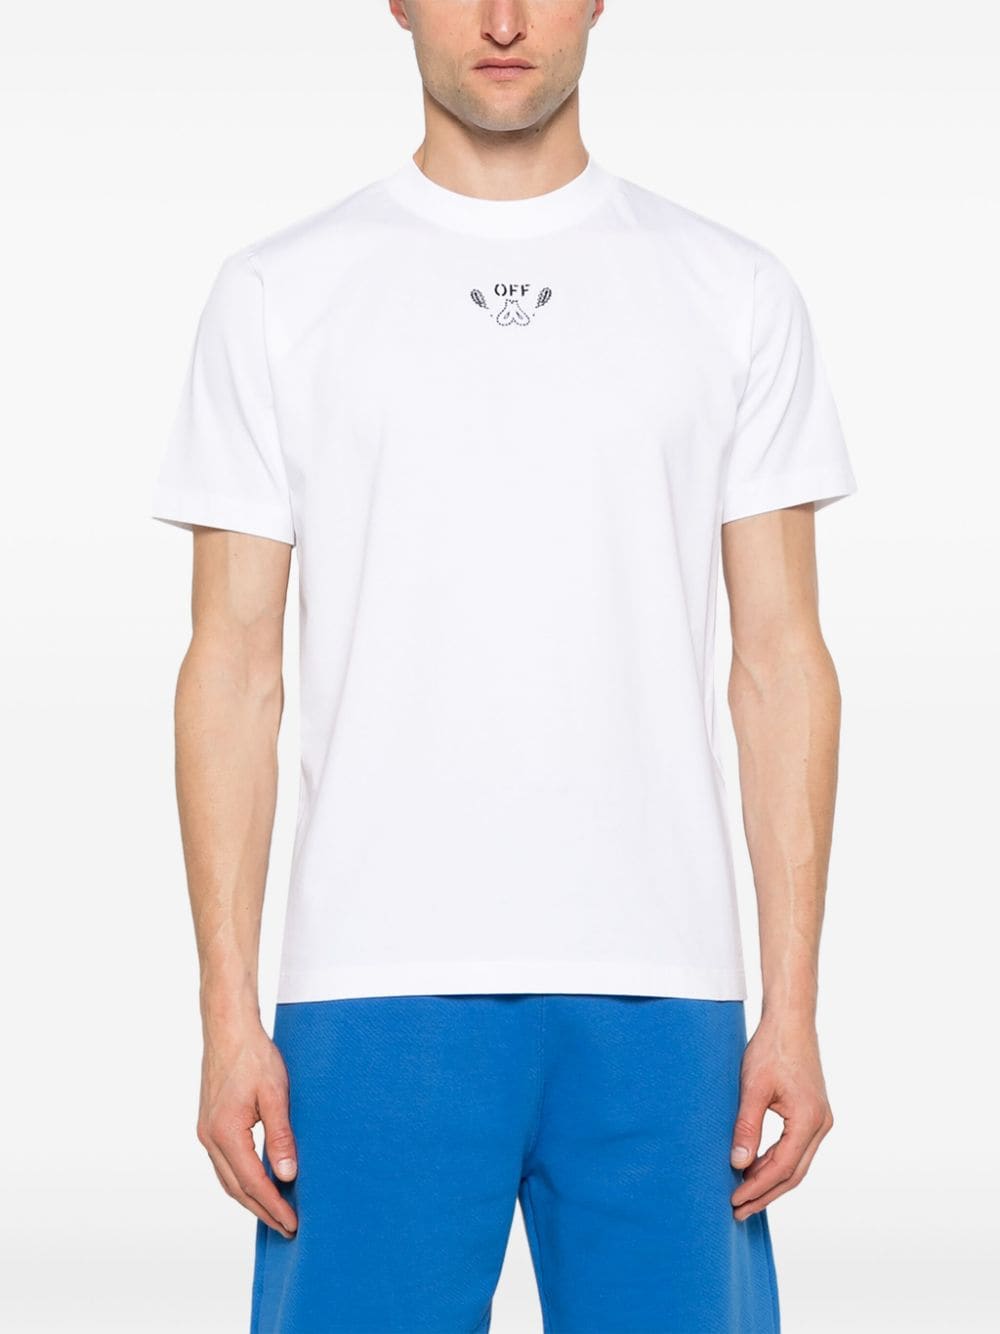 Off White - T-shirt white Bandana Arrow en coton - Lothaire